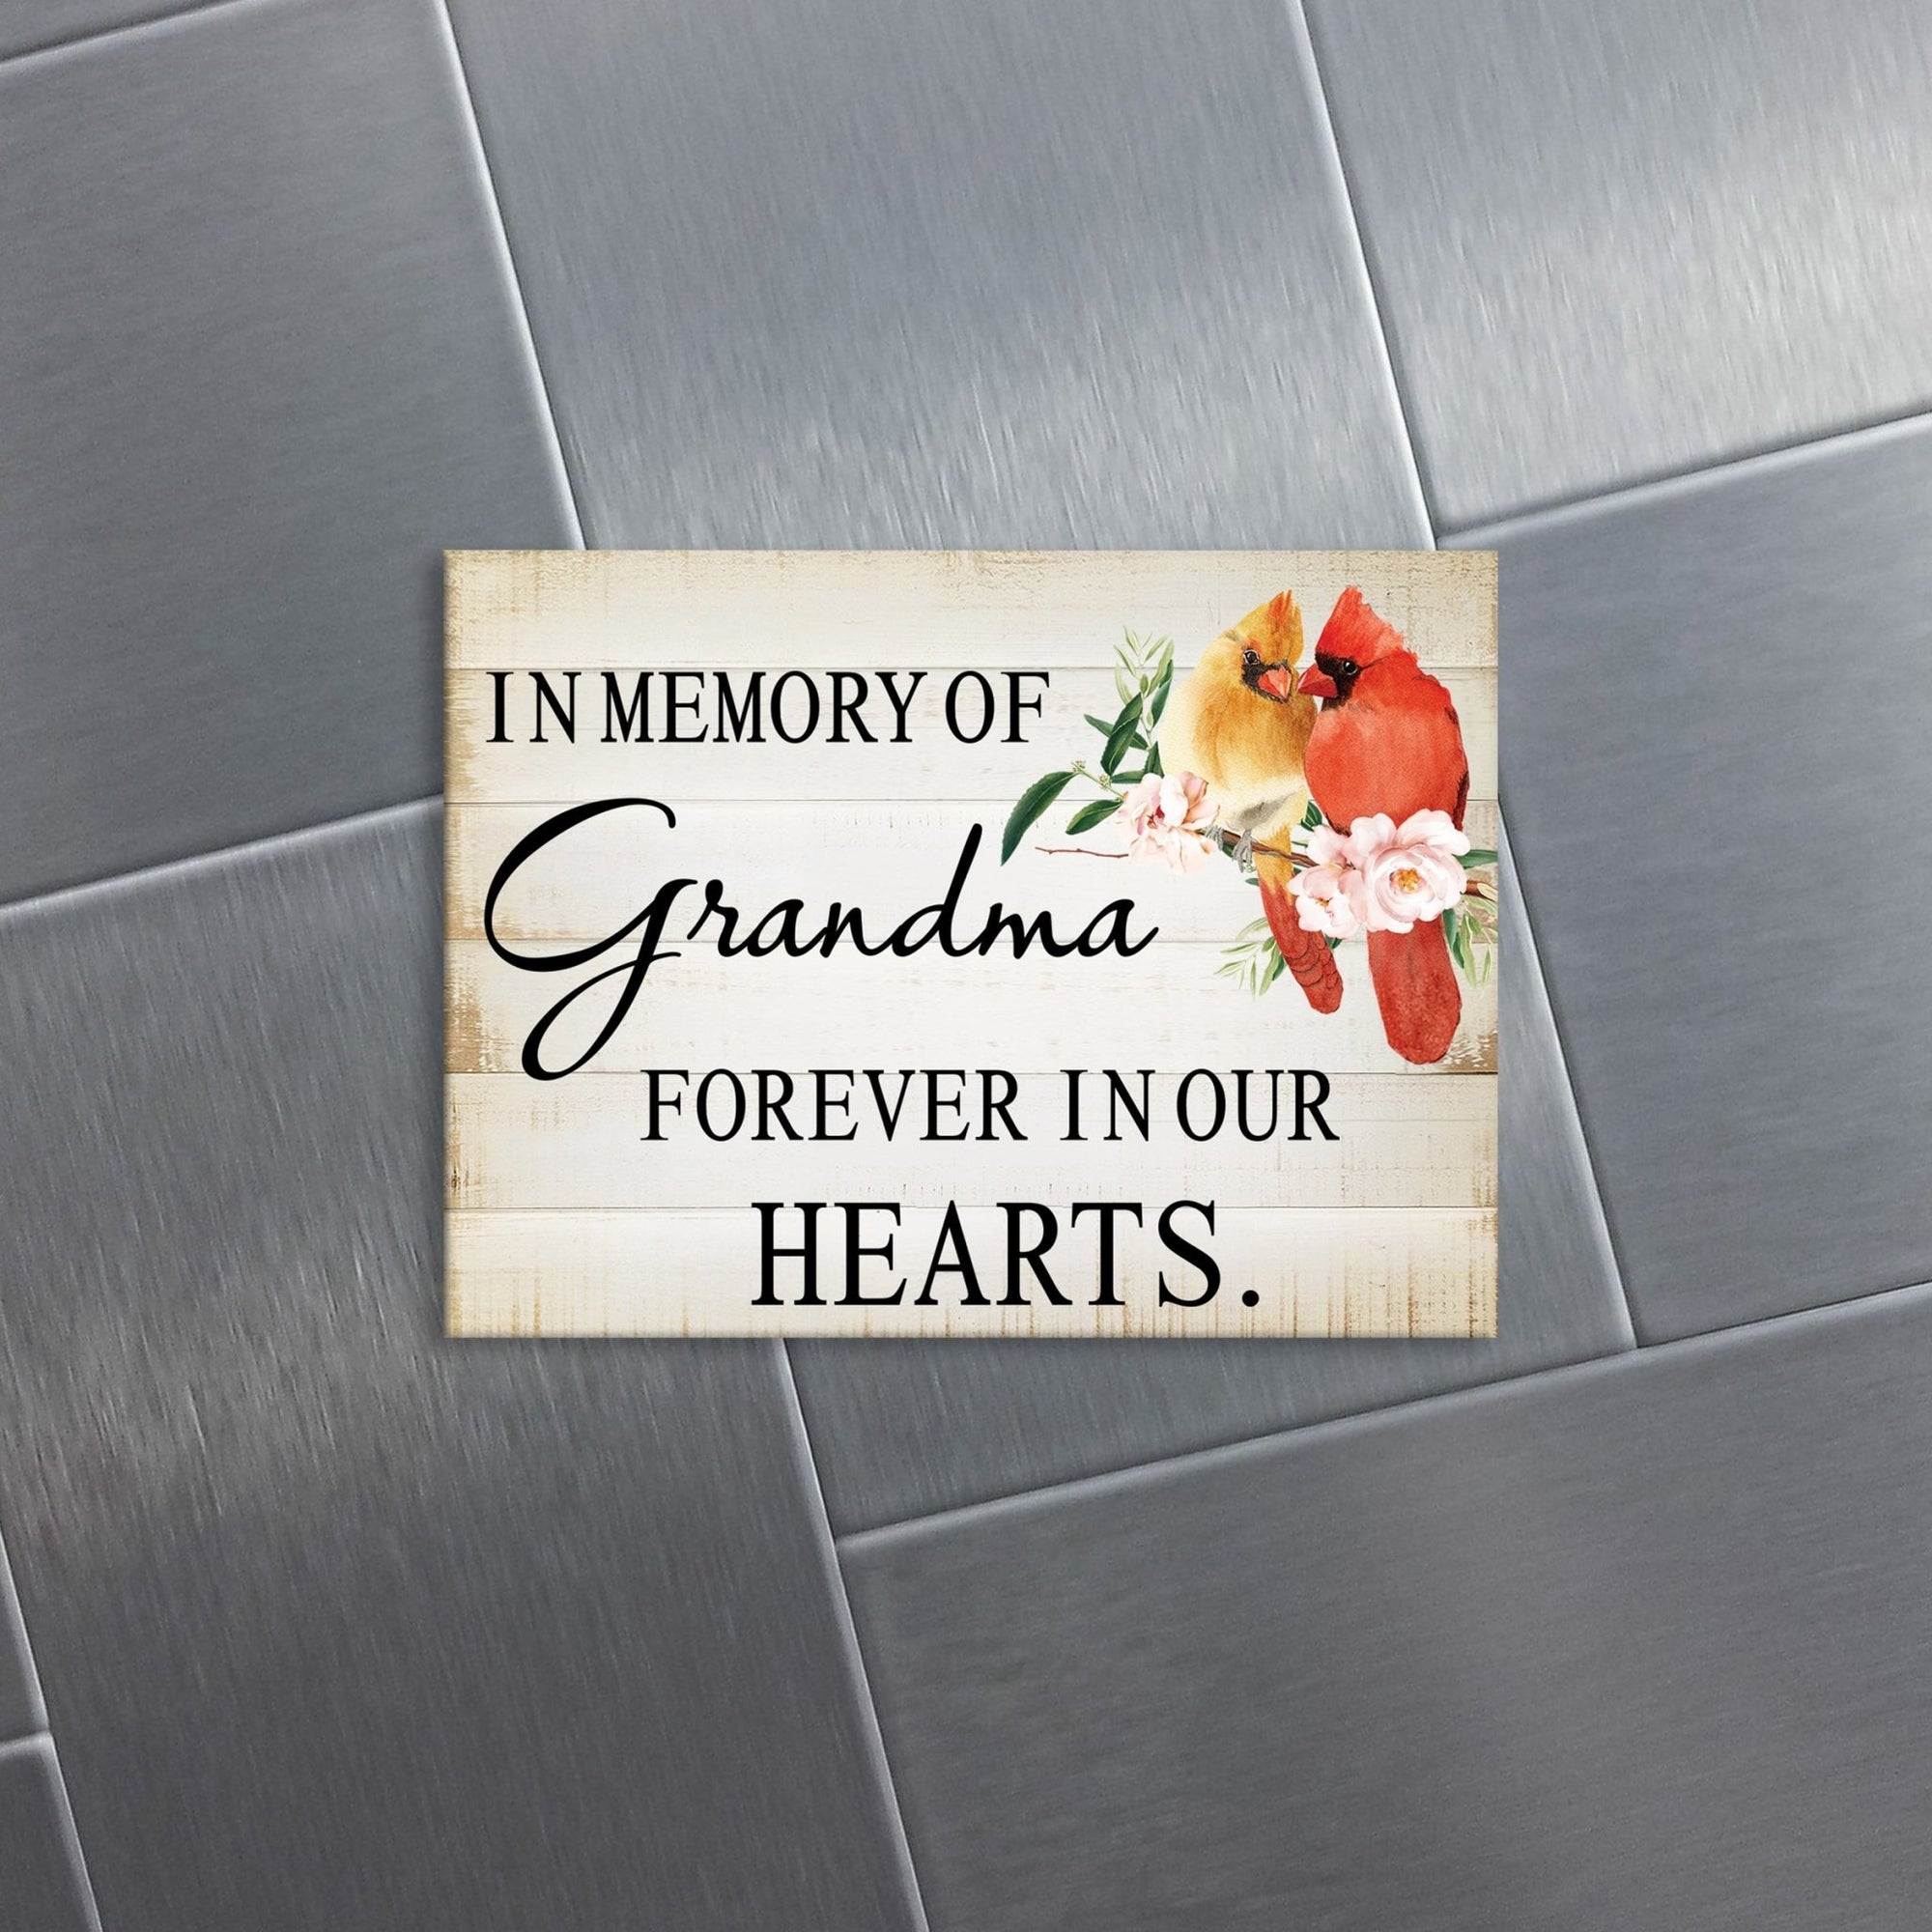 A modern cardinal magnet gracing a refrigerator - a heartfelt home decoration.